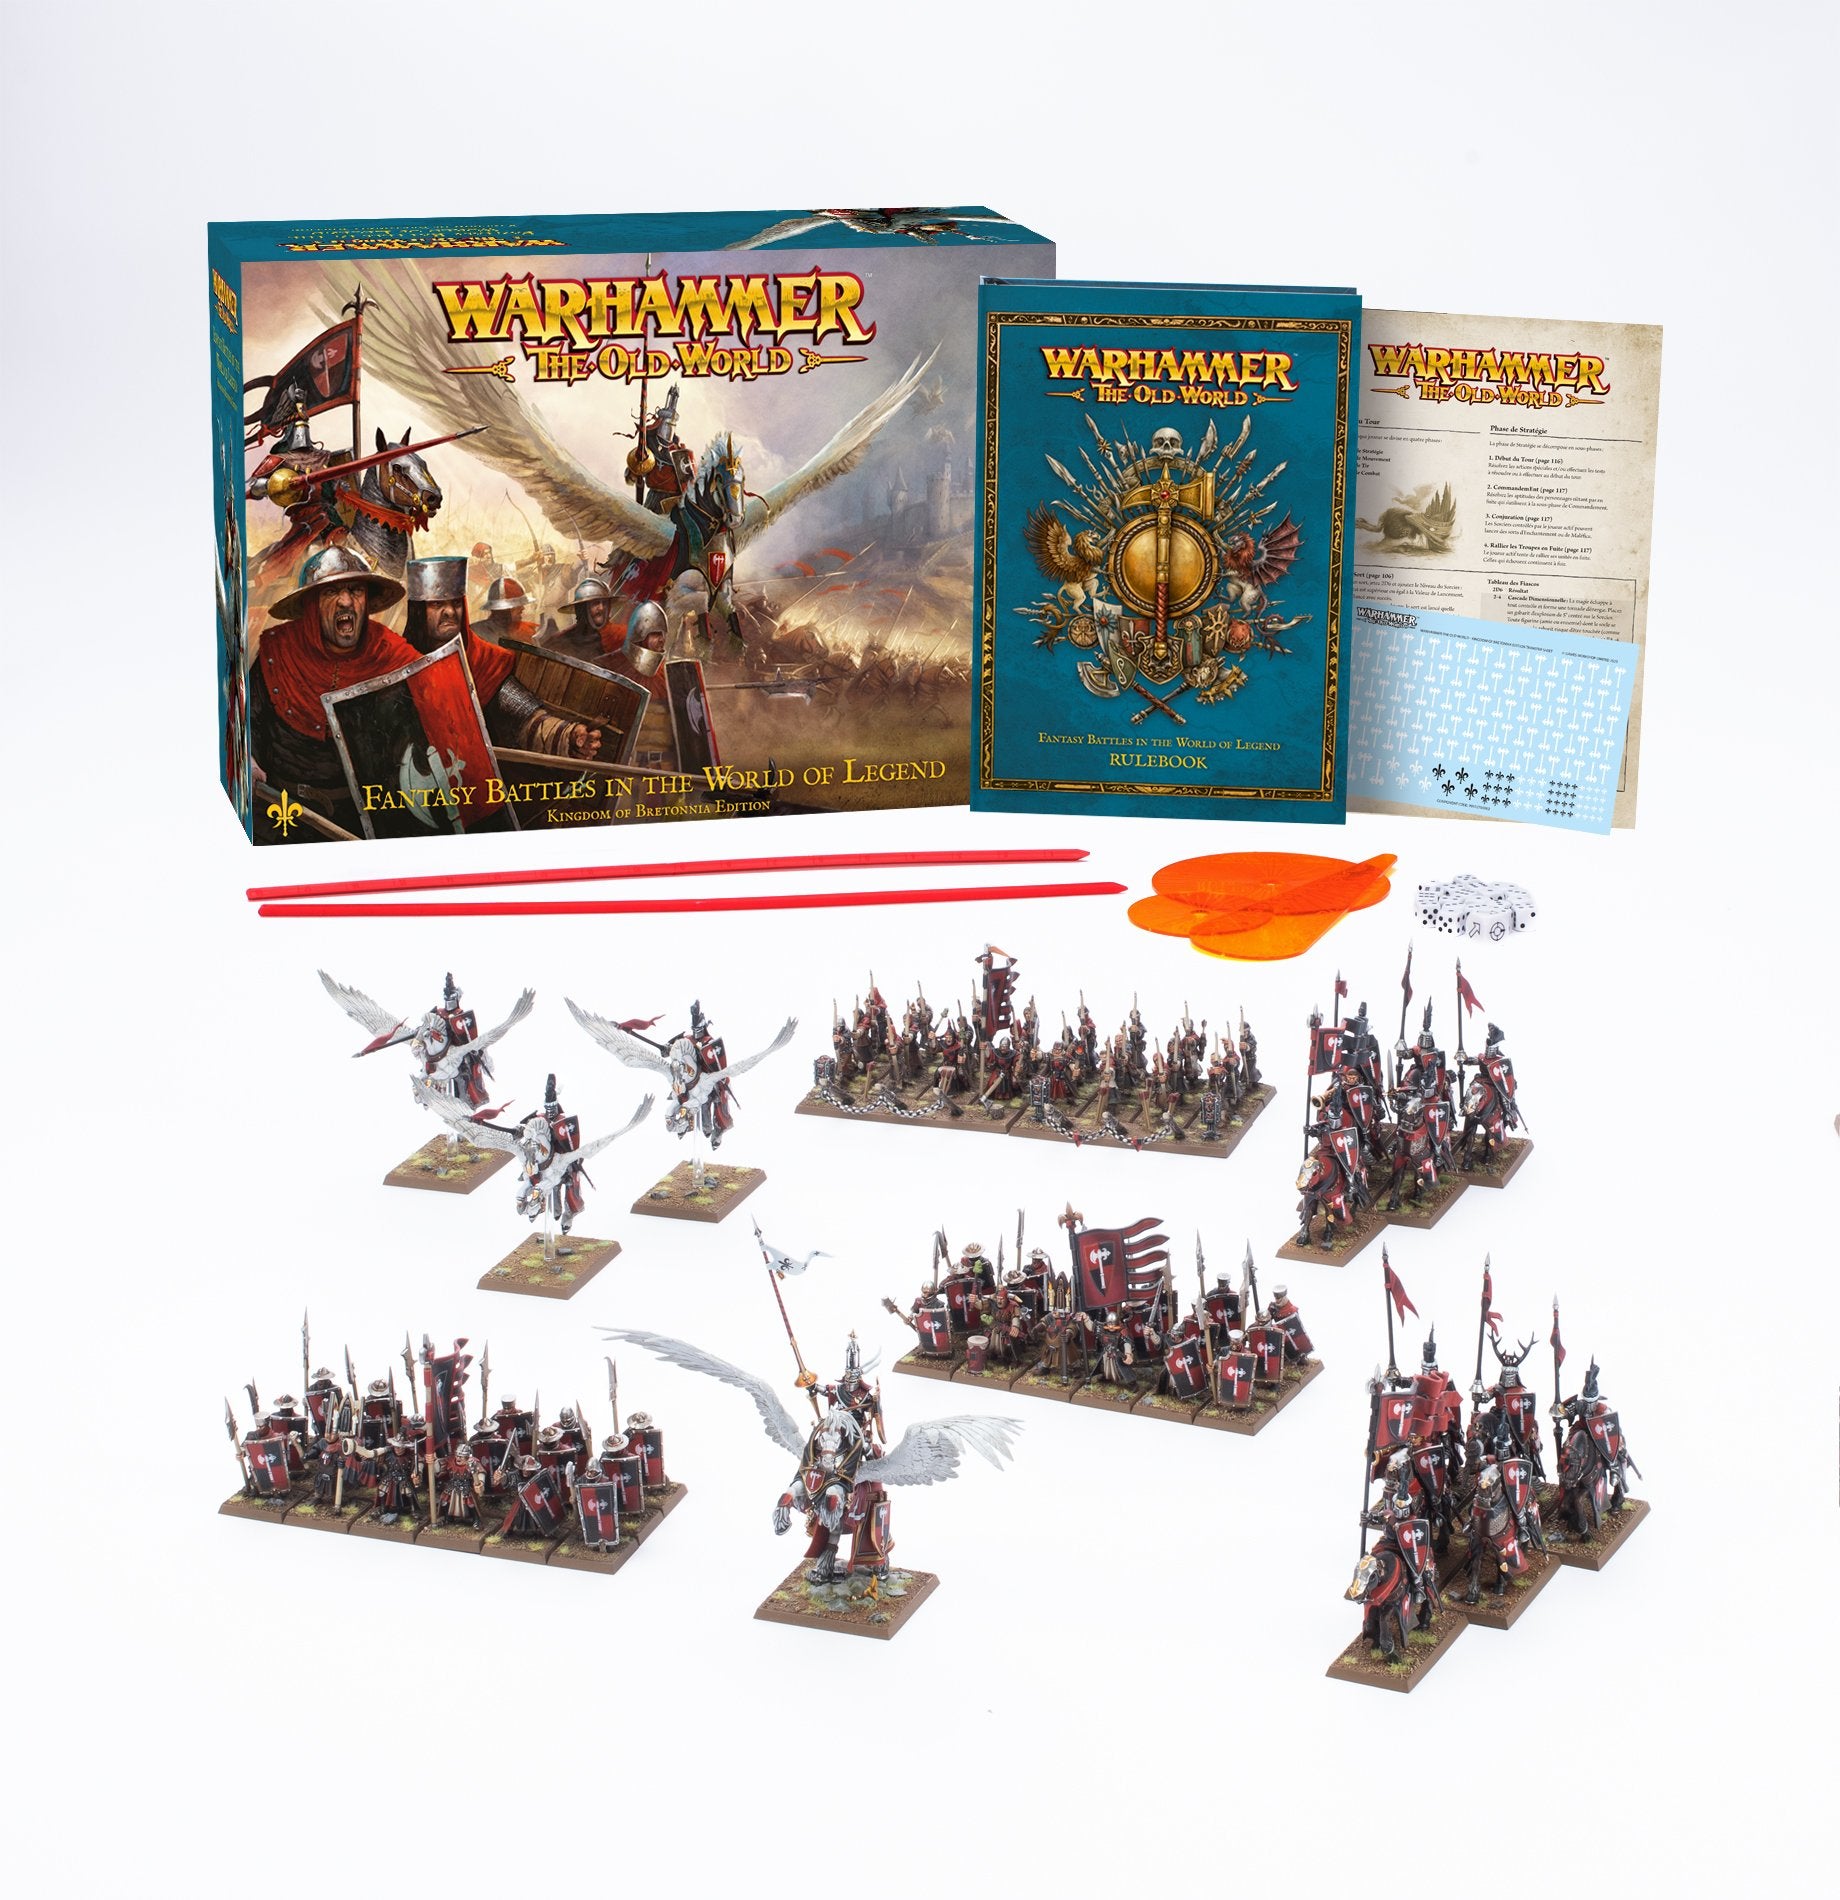 Warhammer The Old World: Core Set - Kingdom of Bretonnia Edition